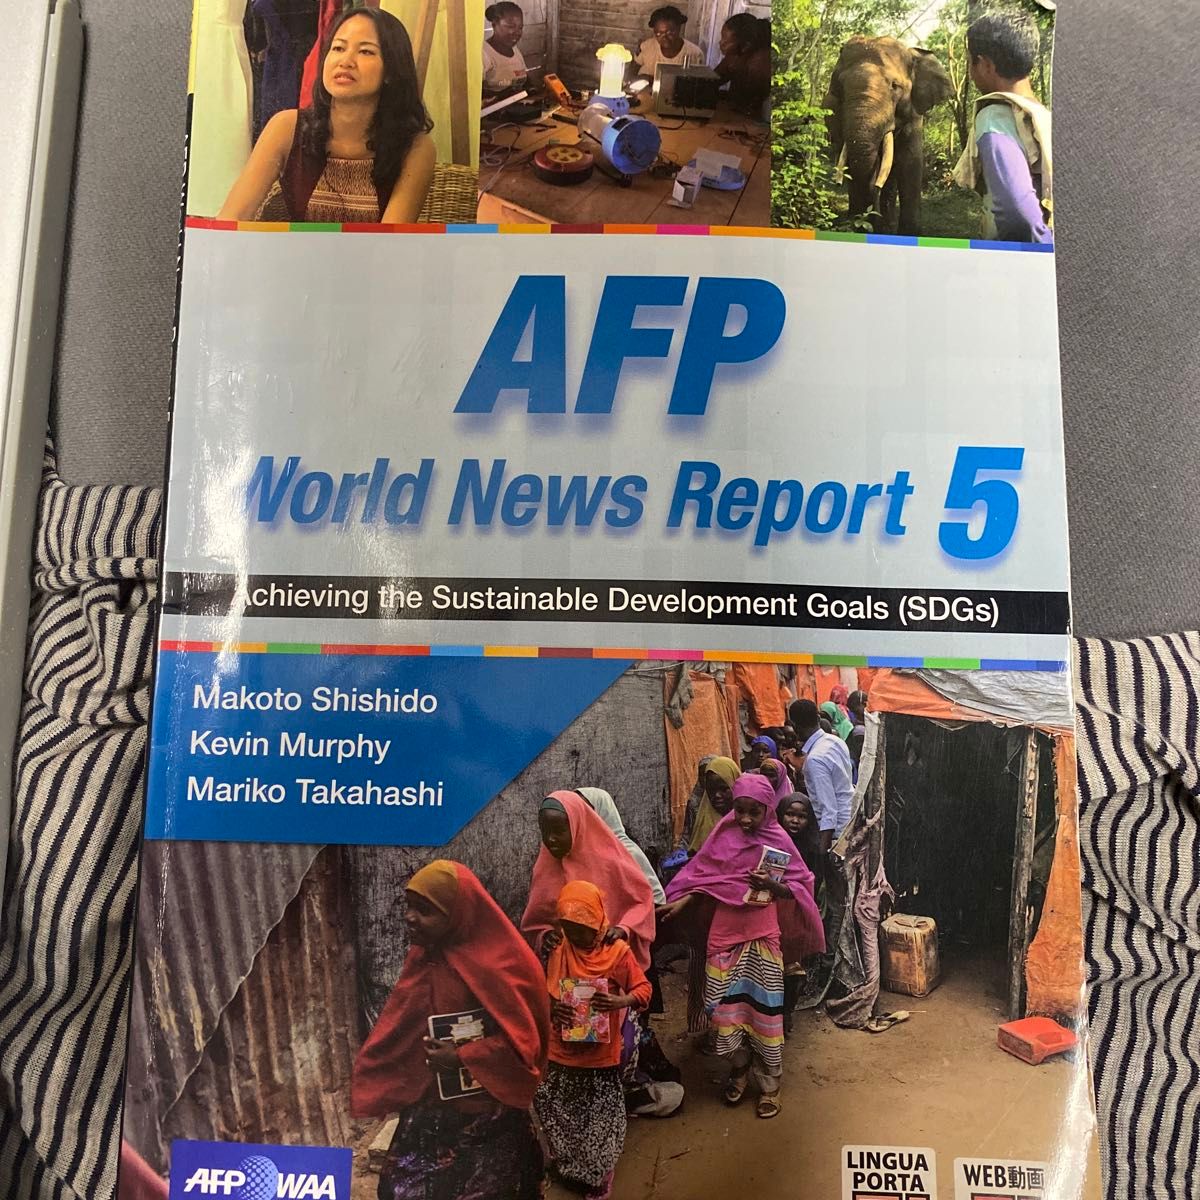 AFP World News Report 5